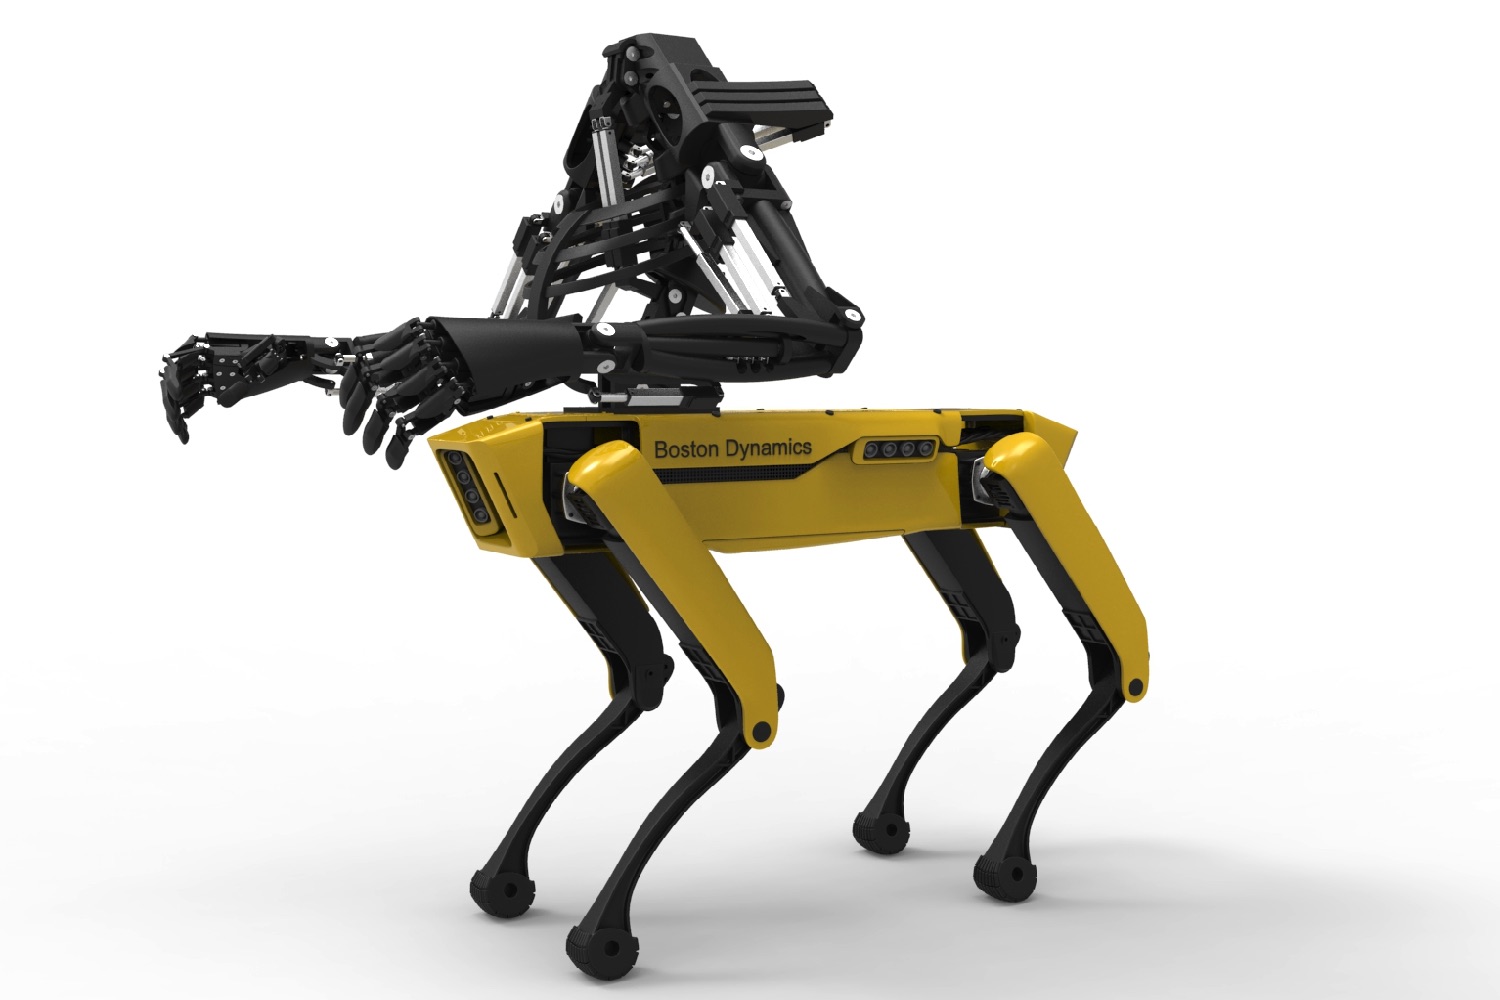 centaur robot youbionic spotmini cyber 3